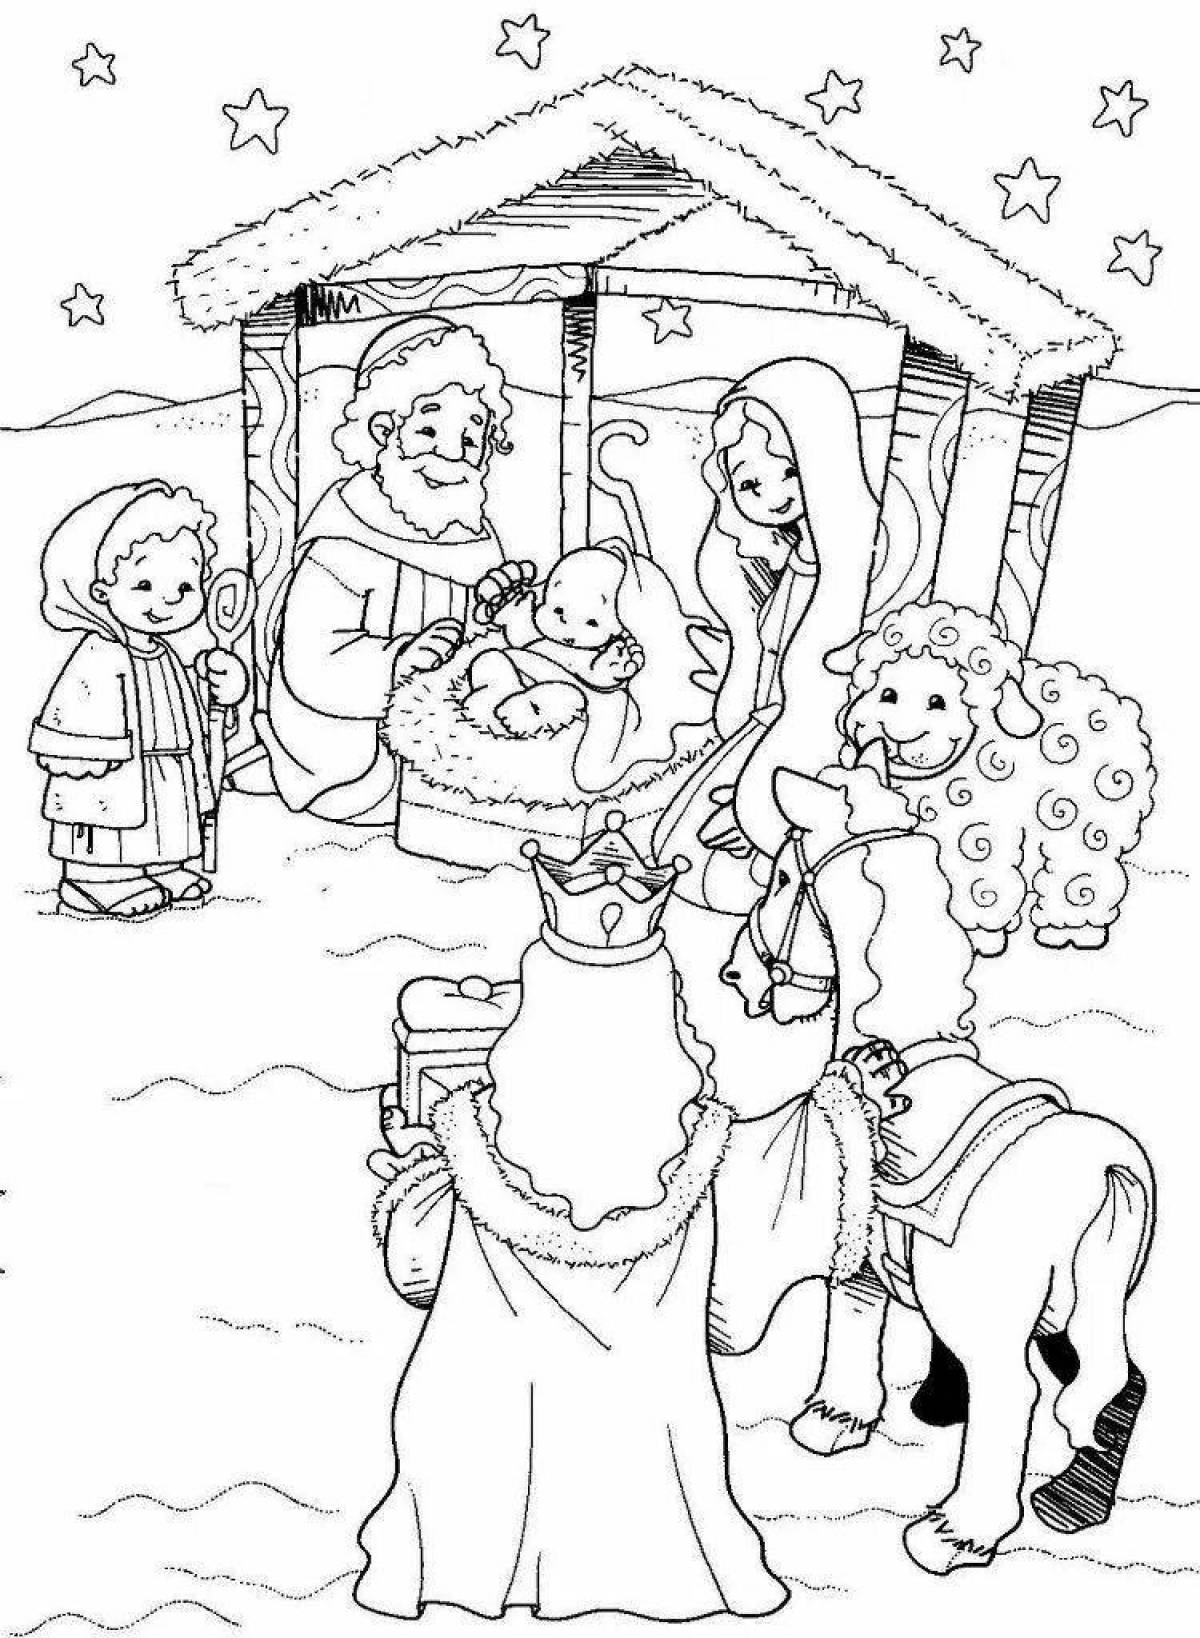 Great Christmas drawing